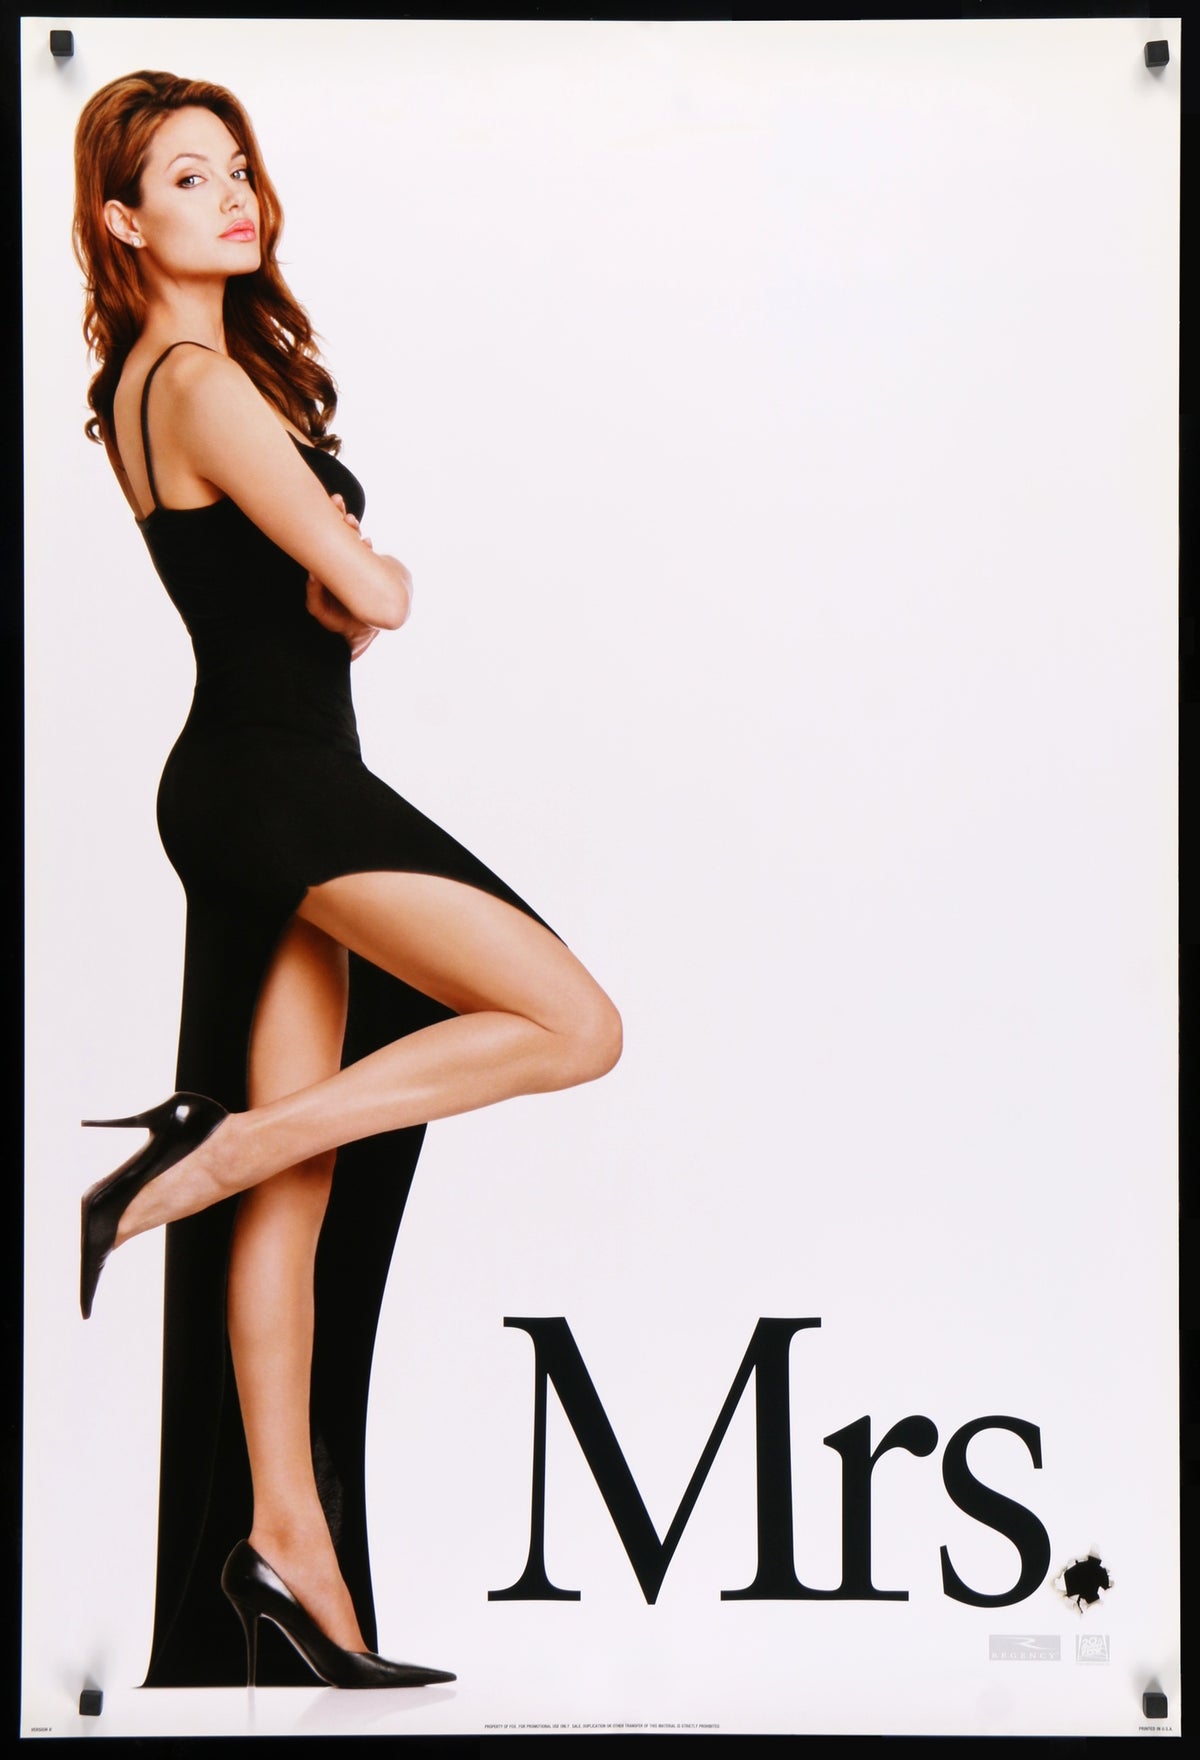 Mr. and Mrs. Smith (2005) original movie poster for sale at Original Film Art